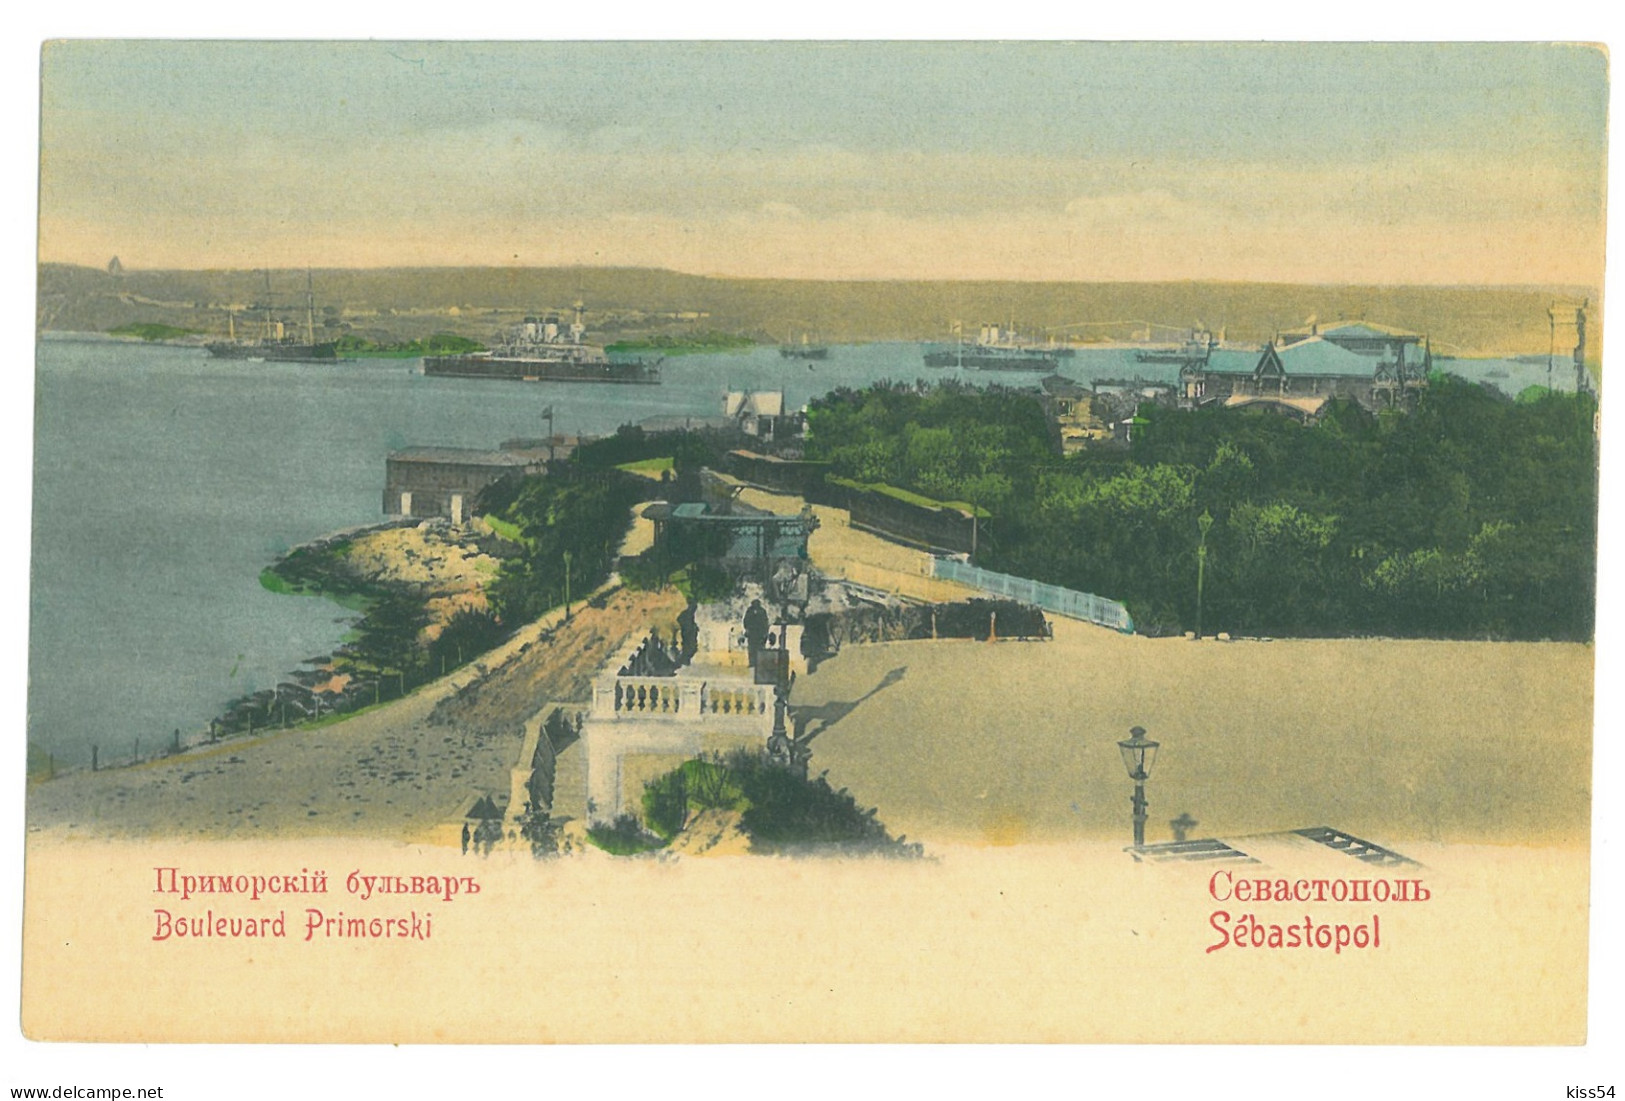 RUS 54 - 21470 SEVASTOPOL, Panorama, Russia - Old Postcard - Unused - Rusia